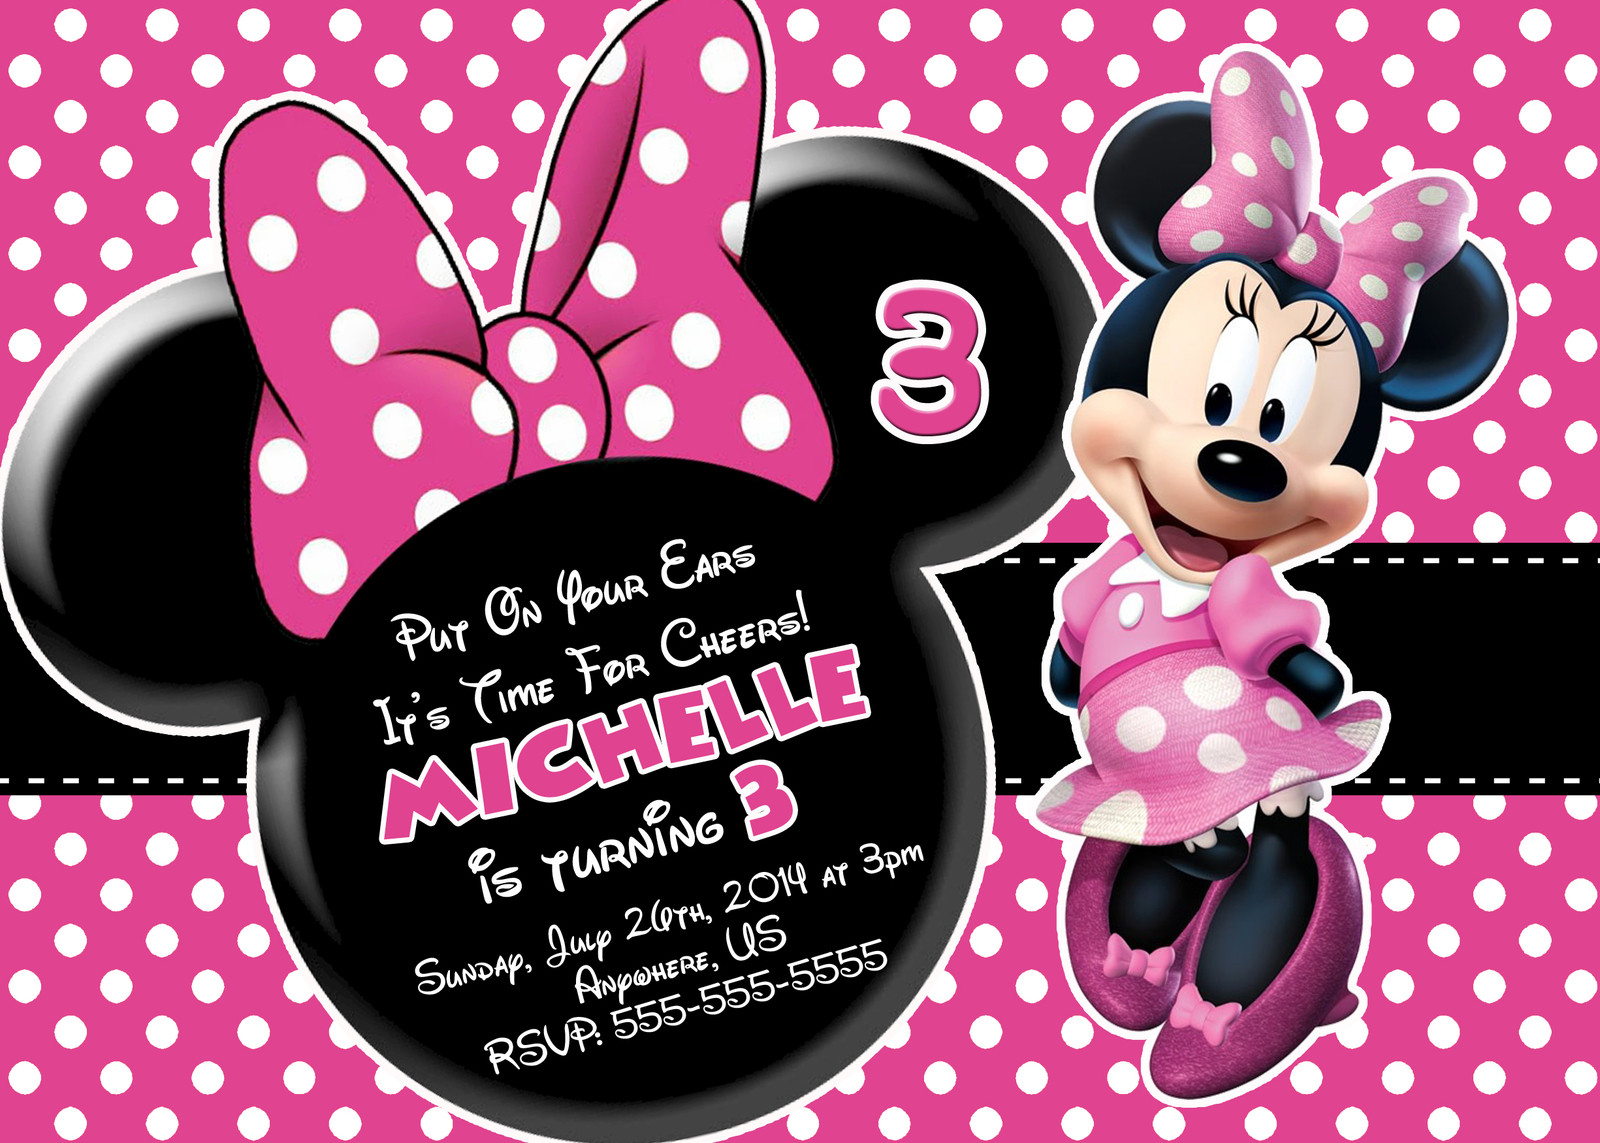 Printable Minnie Mouse Birthday Invitations
 Minnie Mouse Printable Birthday Invitations – FREE